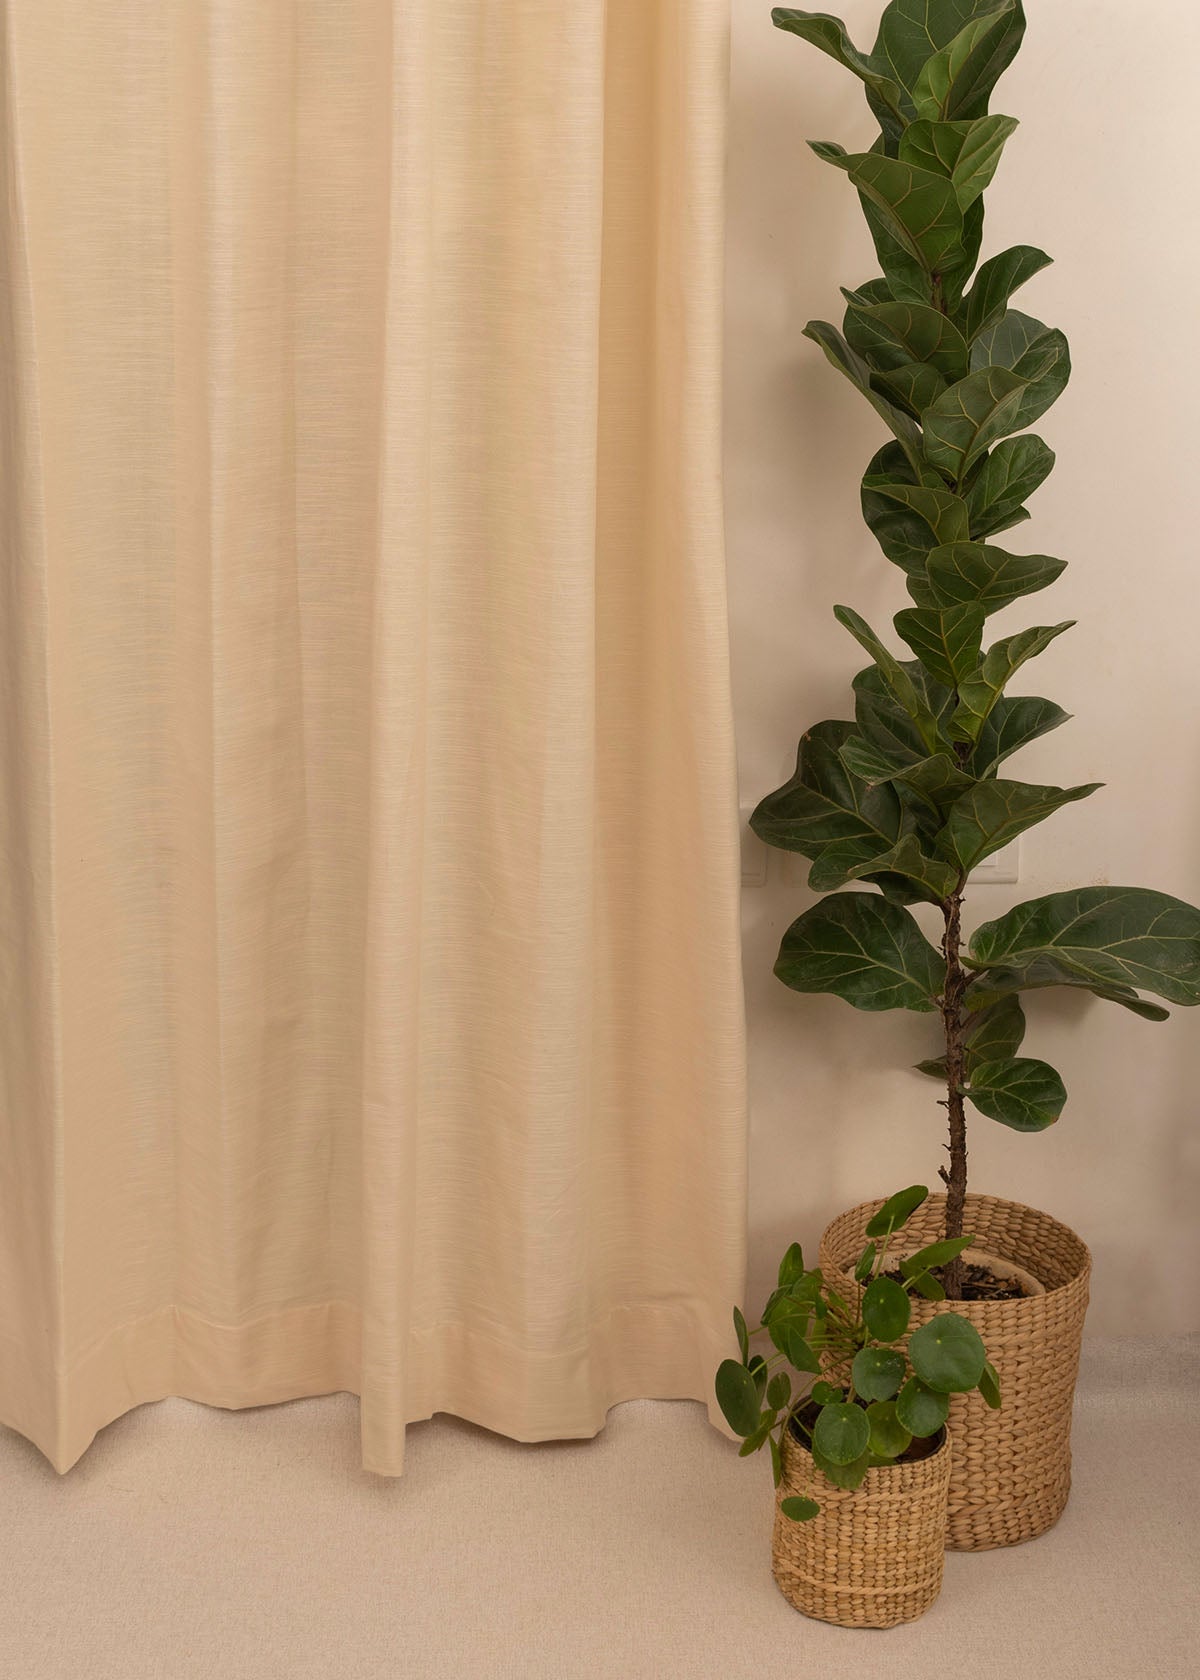 Solid Cream 100% Customizable Cotton plain curtain for bedroom - Room darkening